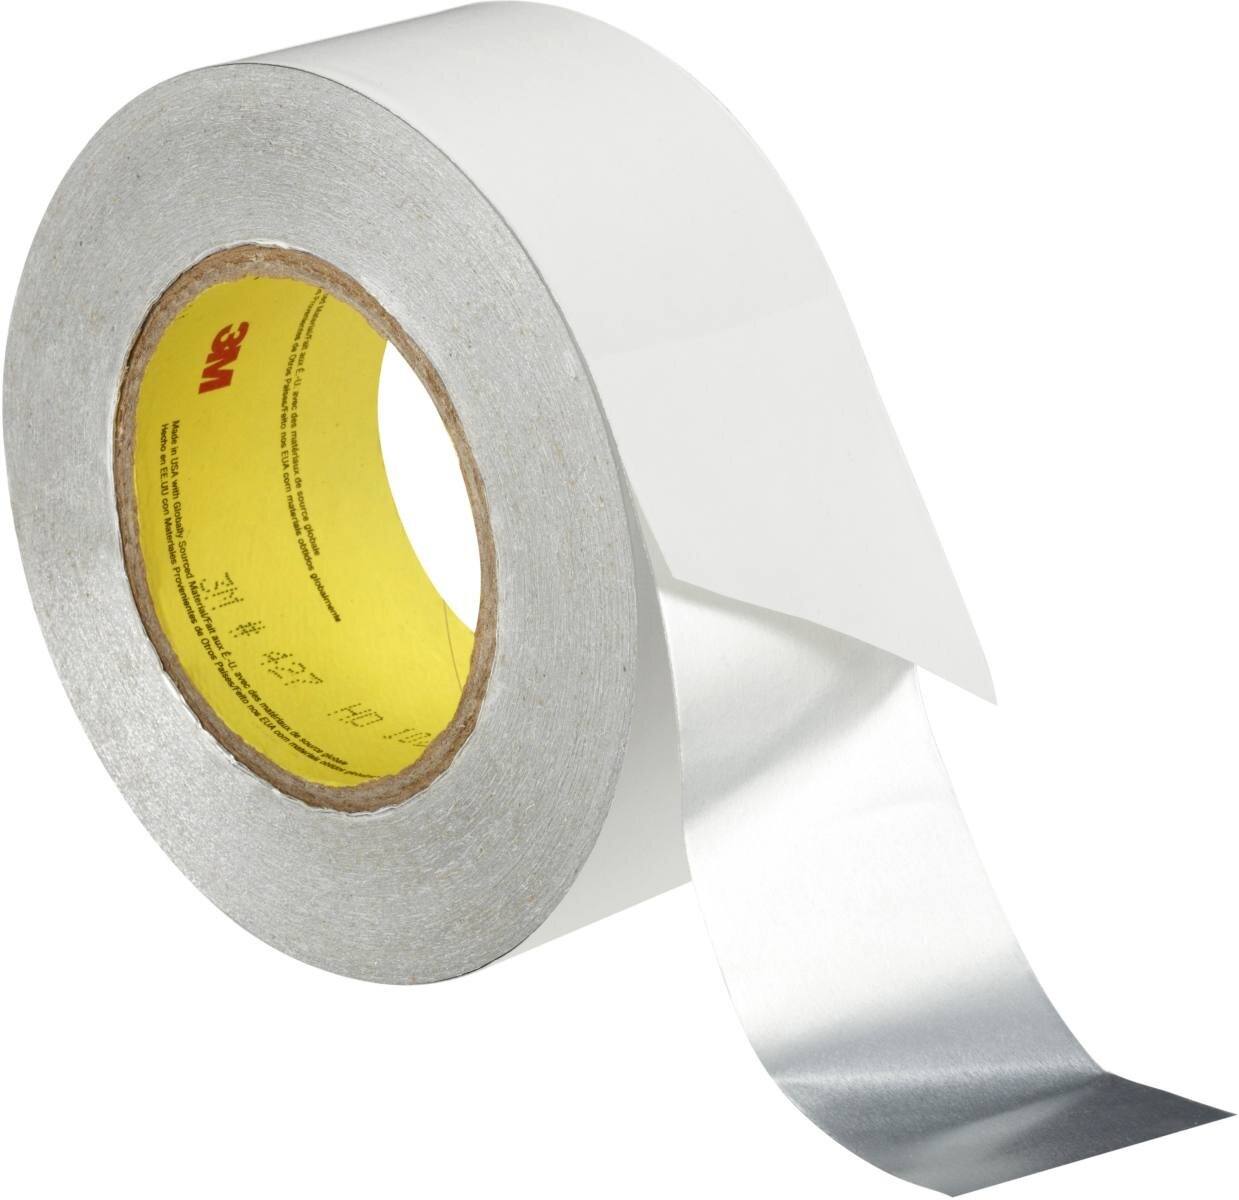 3M metal adhesive tape 427, silver, 25 mm x 55 m, 0.12 mm